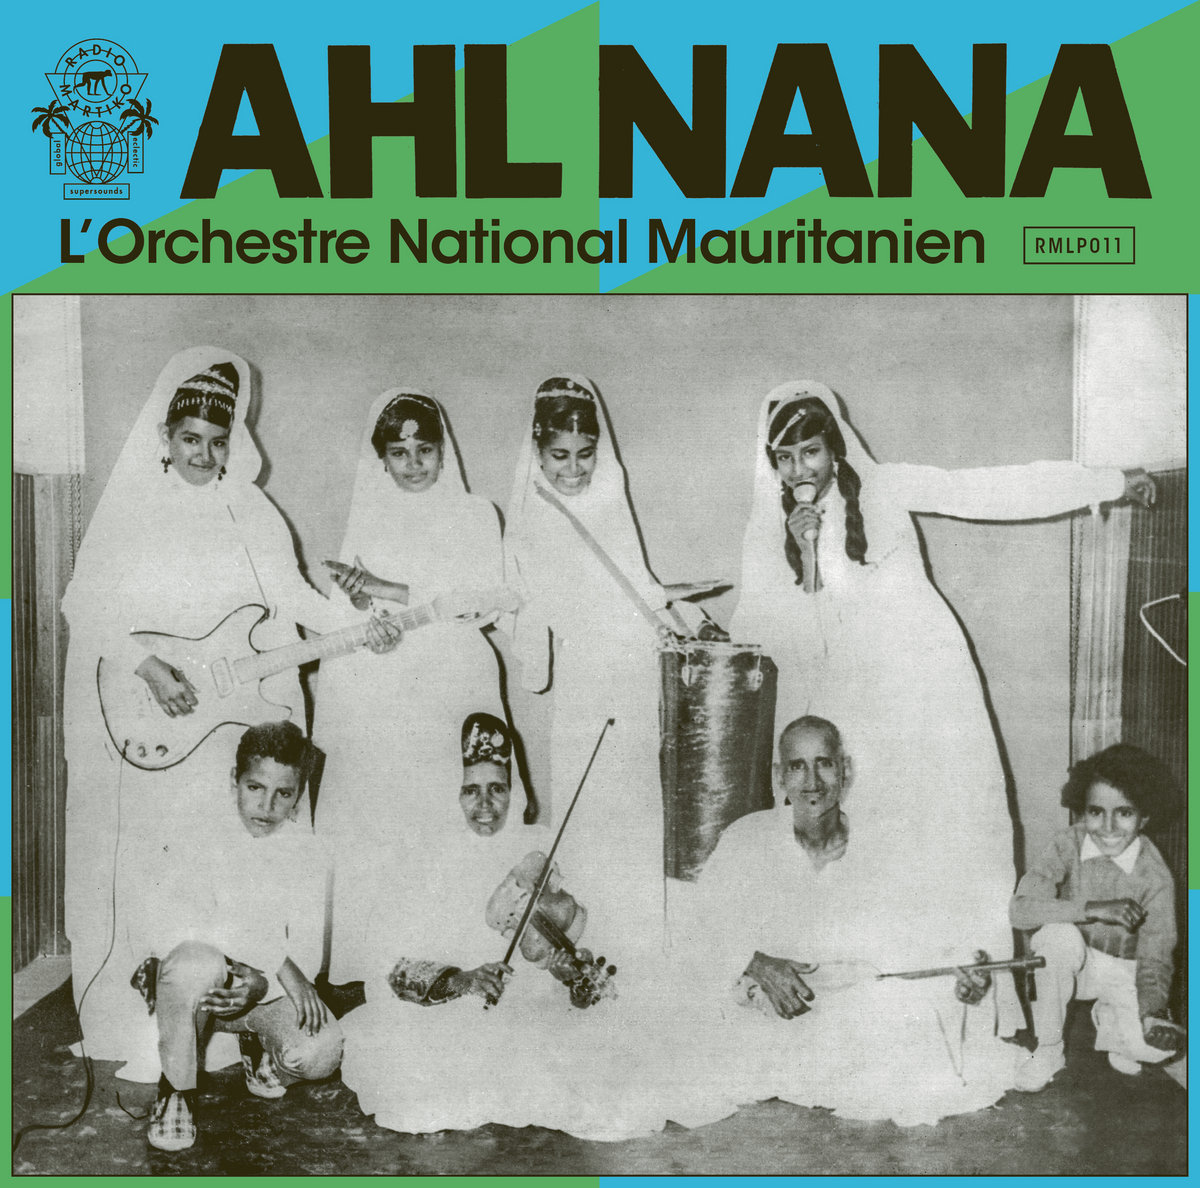 GreedyforBestMusic-Ahl-Nana-L-Orchestre-National-Mauritanien-Radio-Martiko-Bandcamp